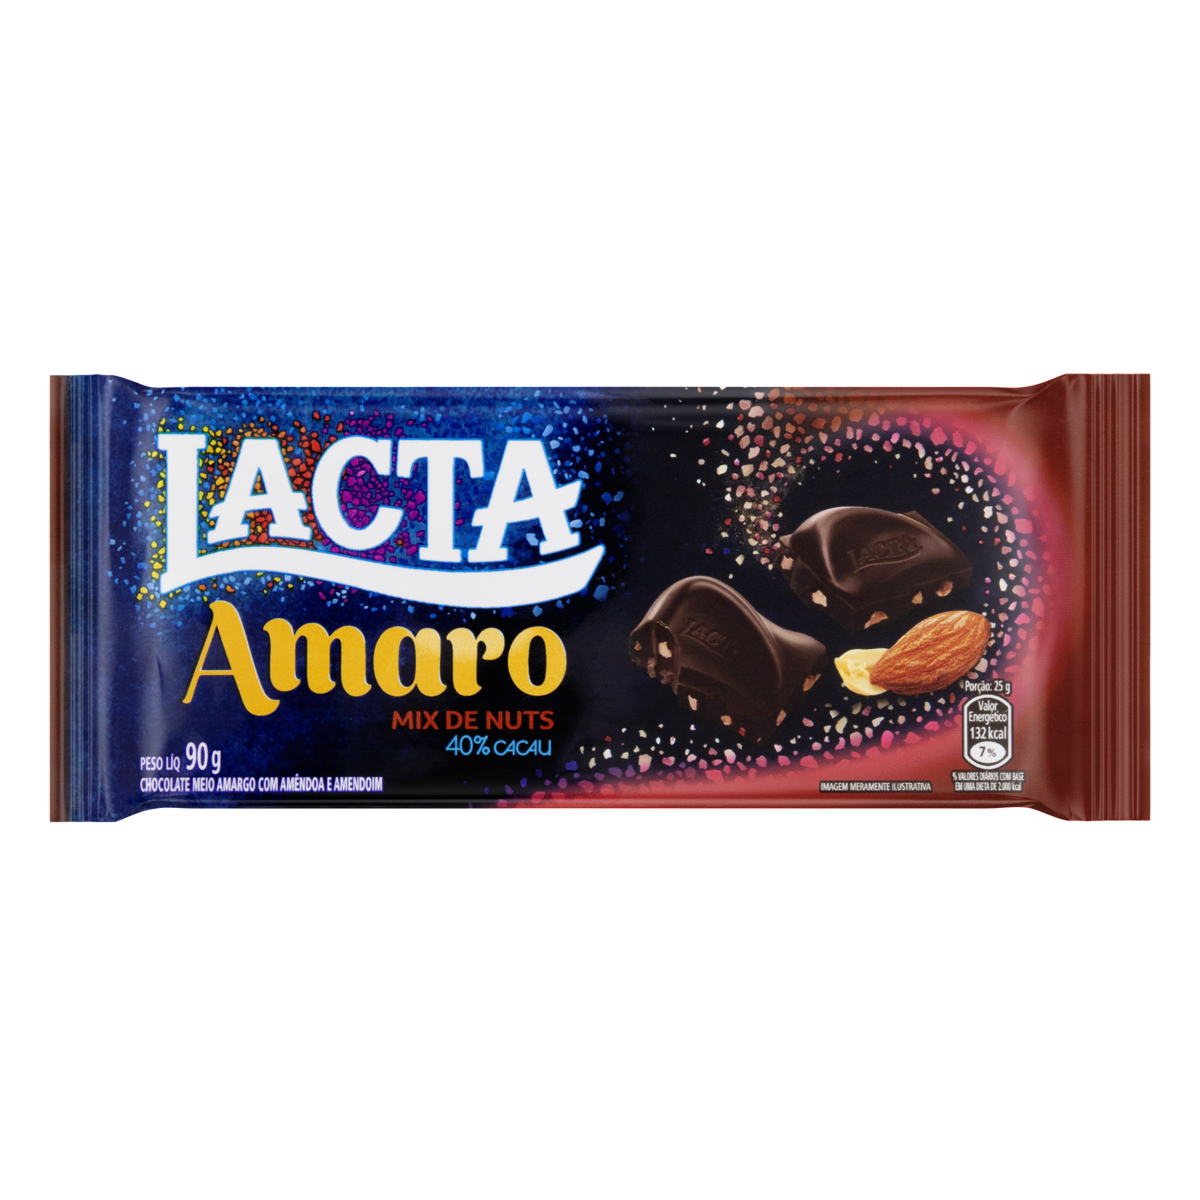 7622210962072 - CHOCOLATE MEIO AMARGO 40% CACAU MIX DE NUTS LACTA AMARO PACOTE 90G